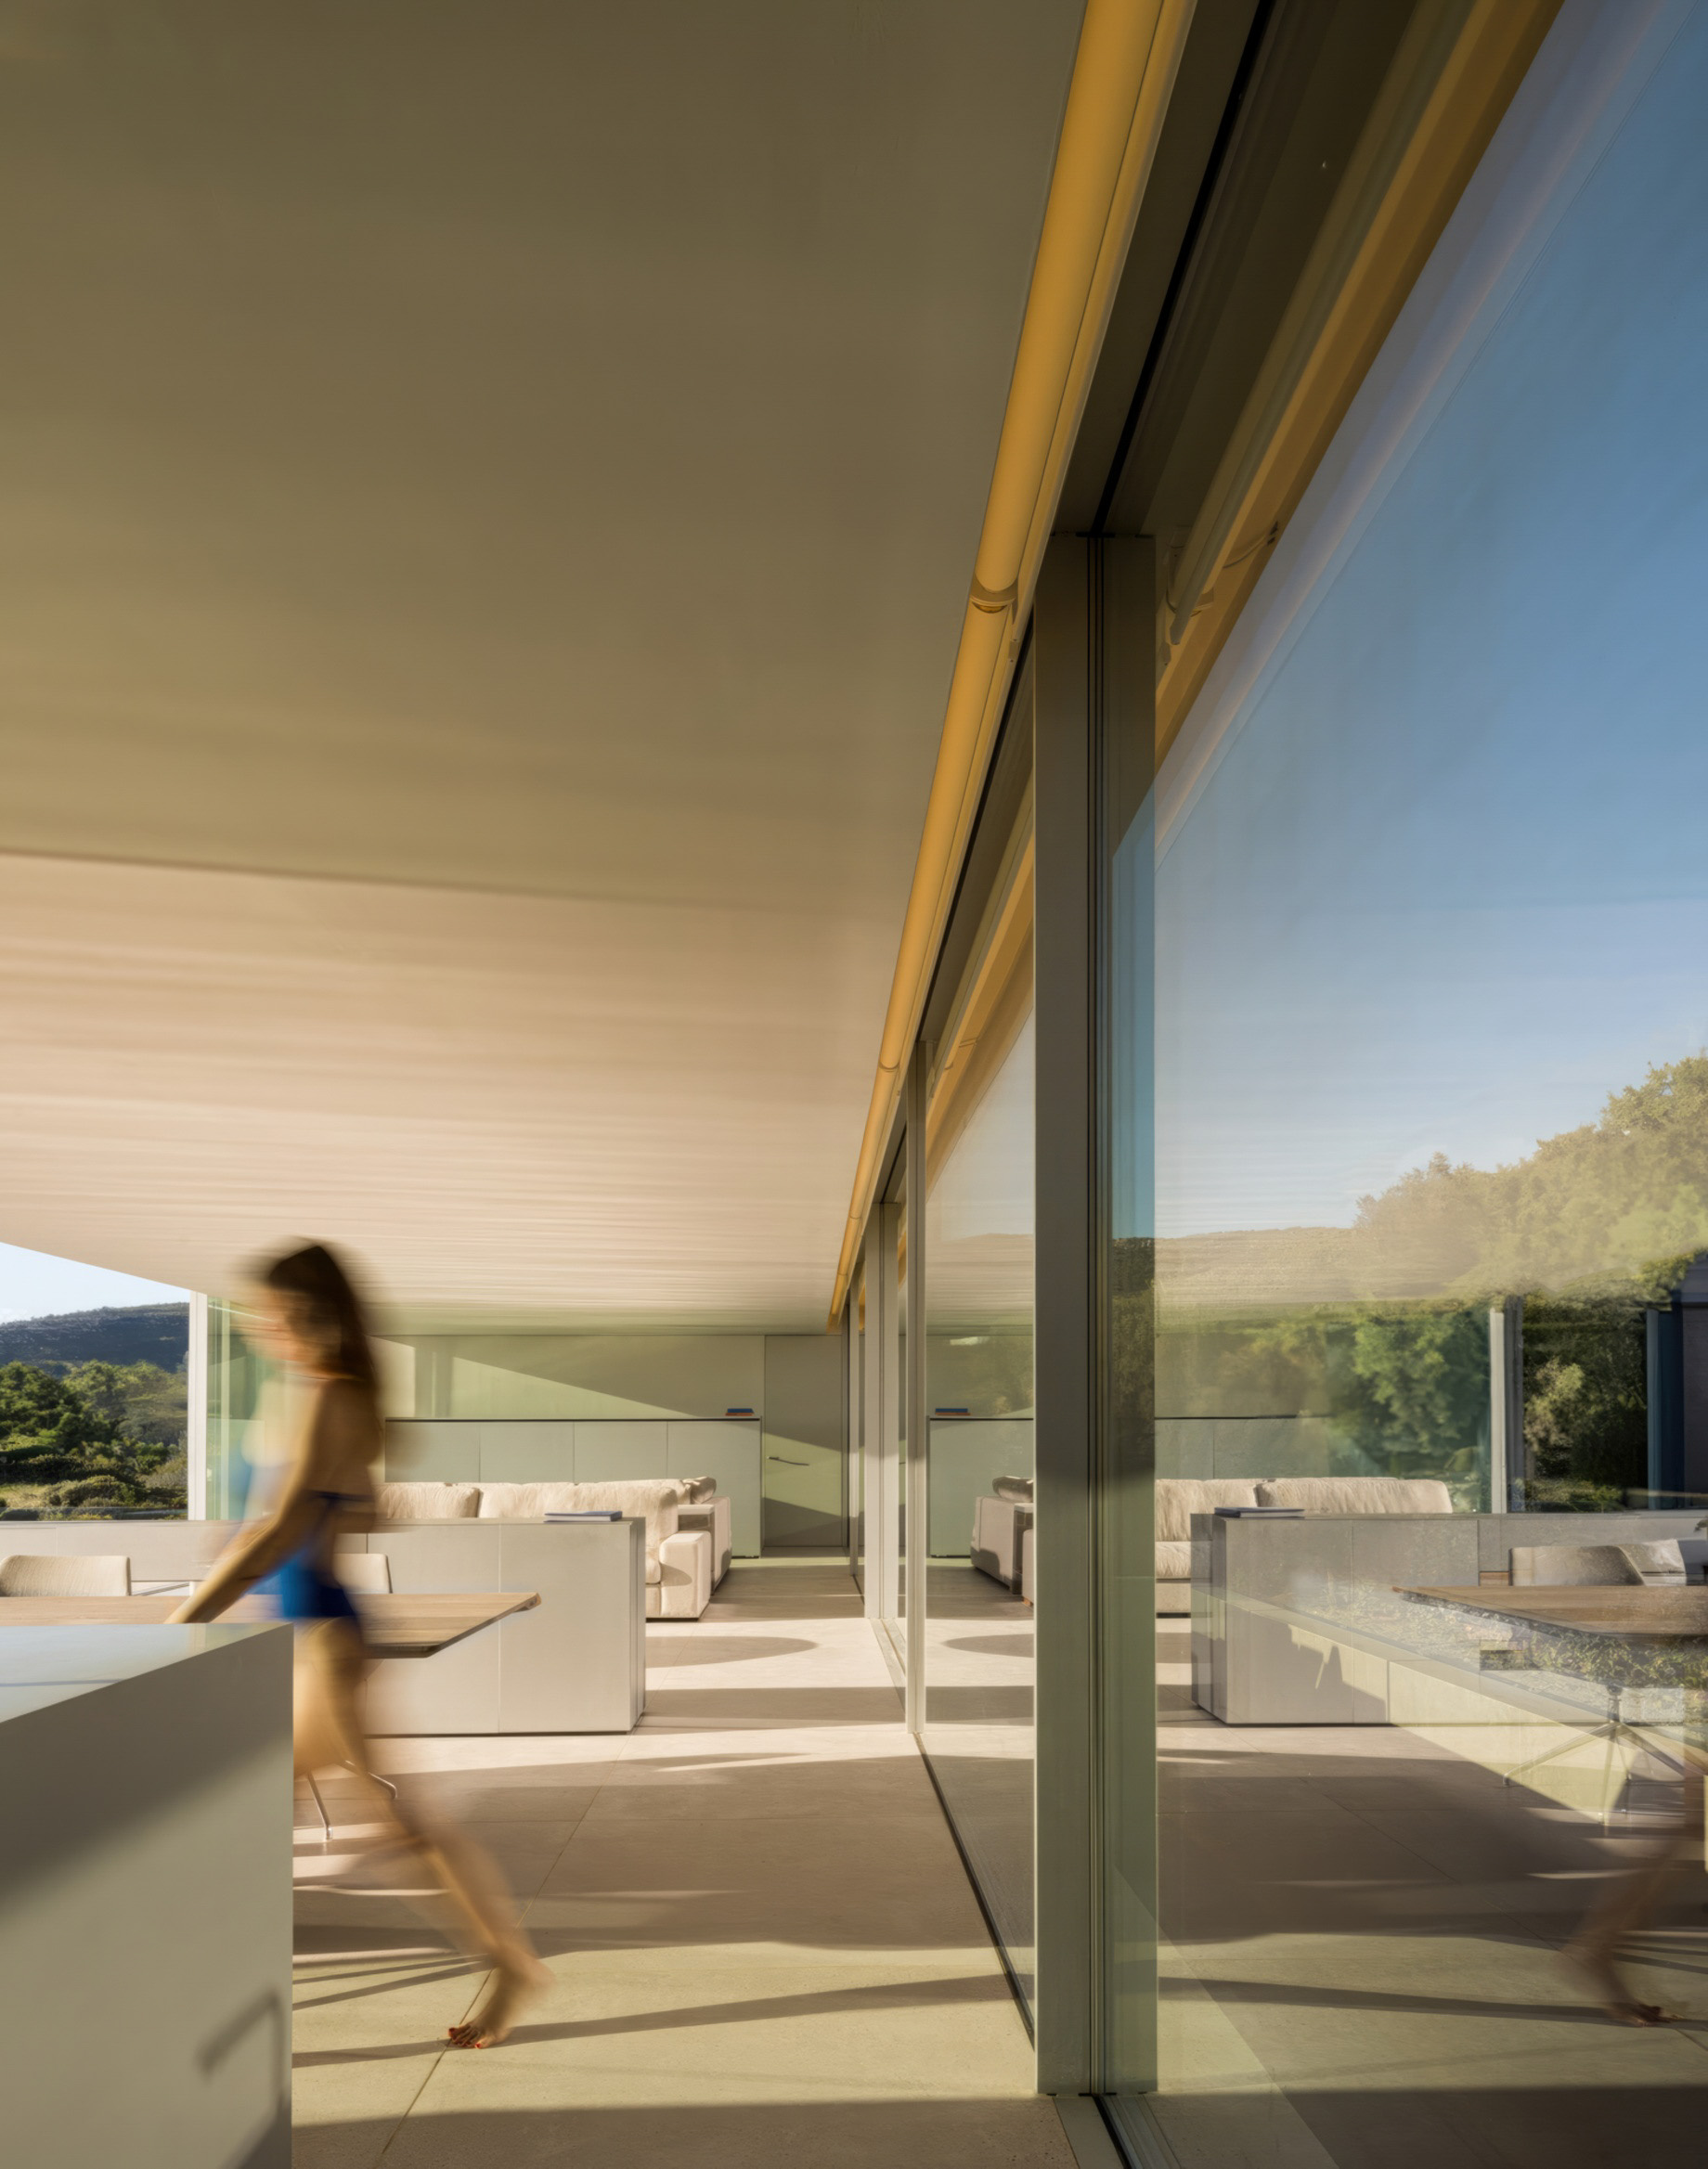 House on the Air Modern Contemporary Villa – Zahara de los Atunes, Spain – 25